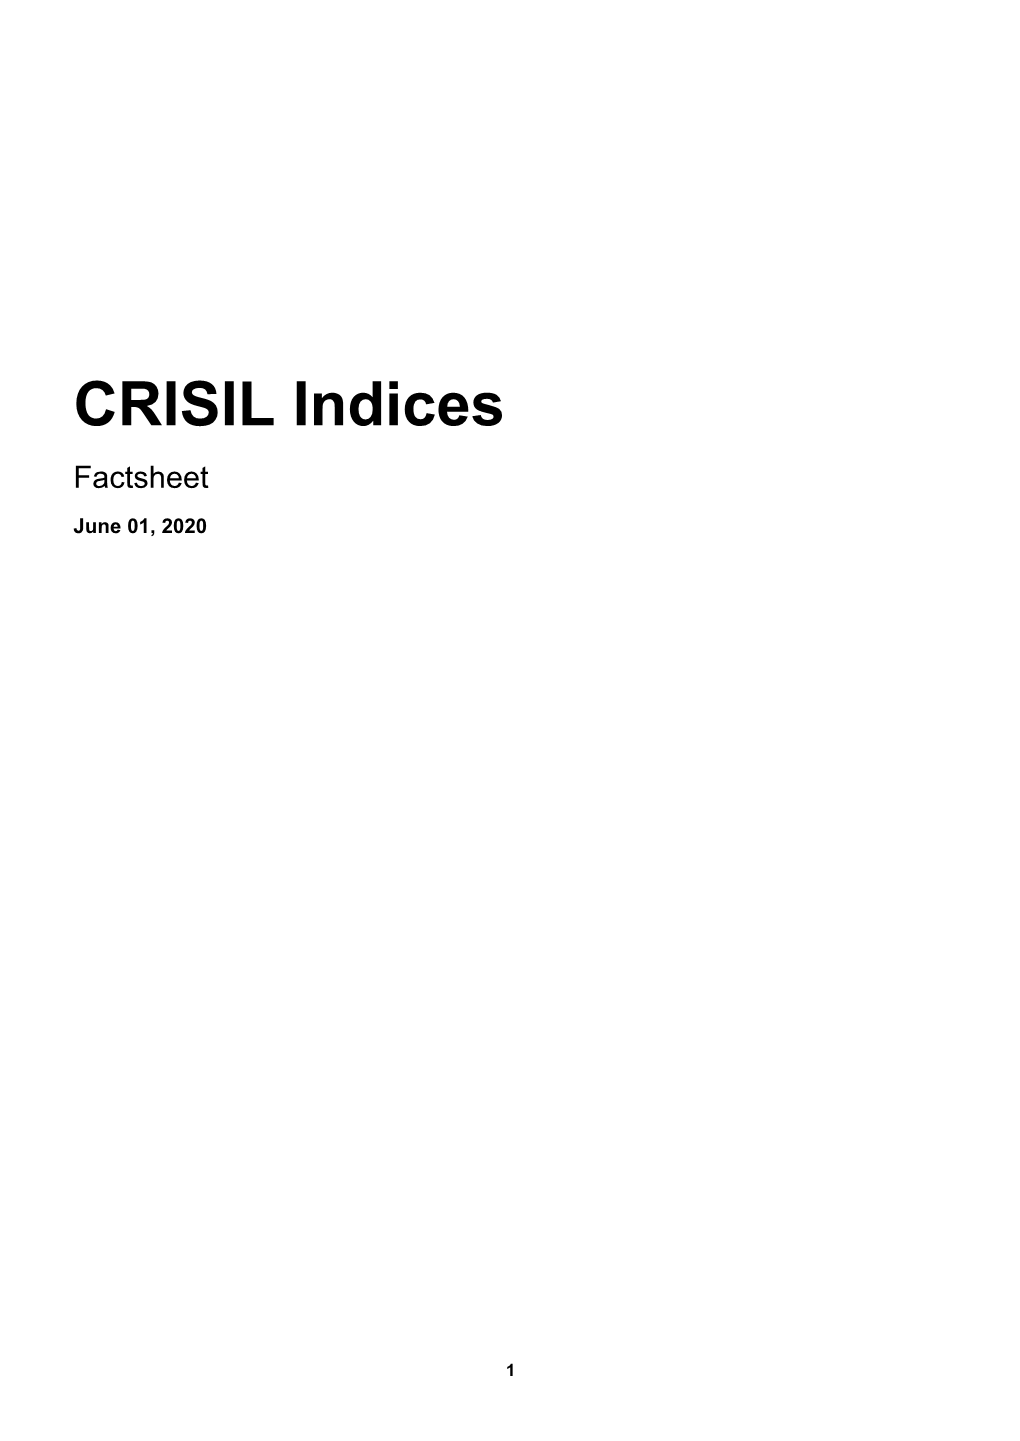 CRISIL Indices Factsheet